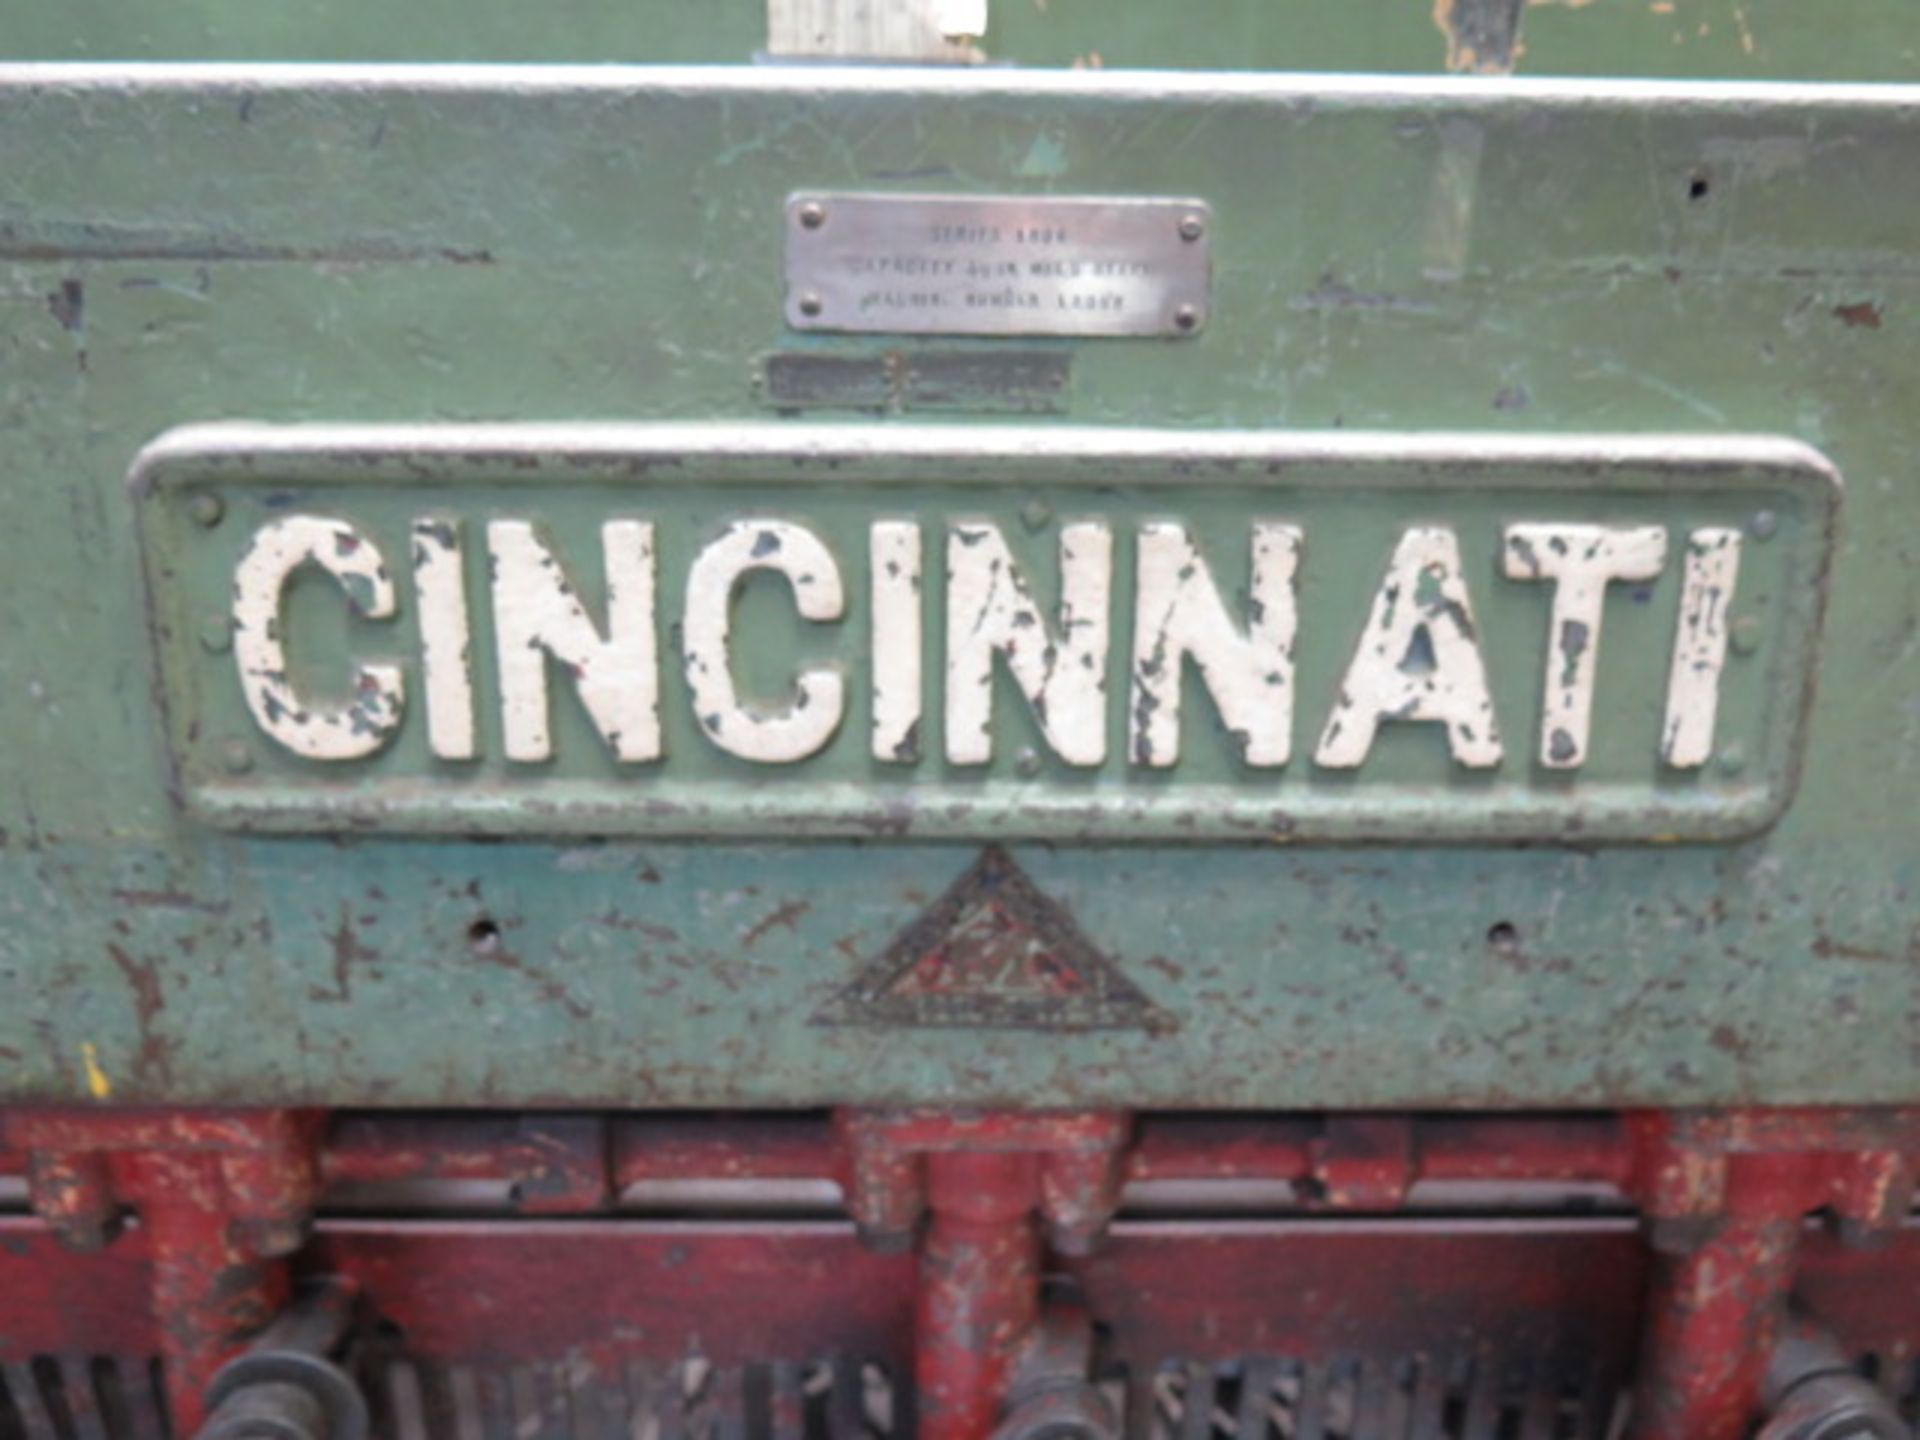 Cincinnati mdl. 1806 3/8" x 6' Cap Power Shear s/n 12058 w/ Power Back Gage, 80" Sq Arm, SOLD AS IS - Image 3 of 15